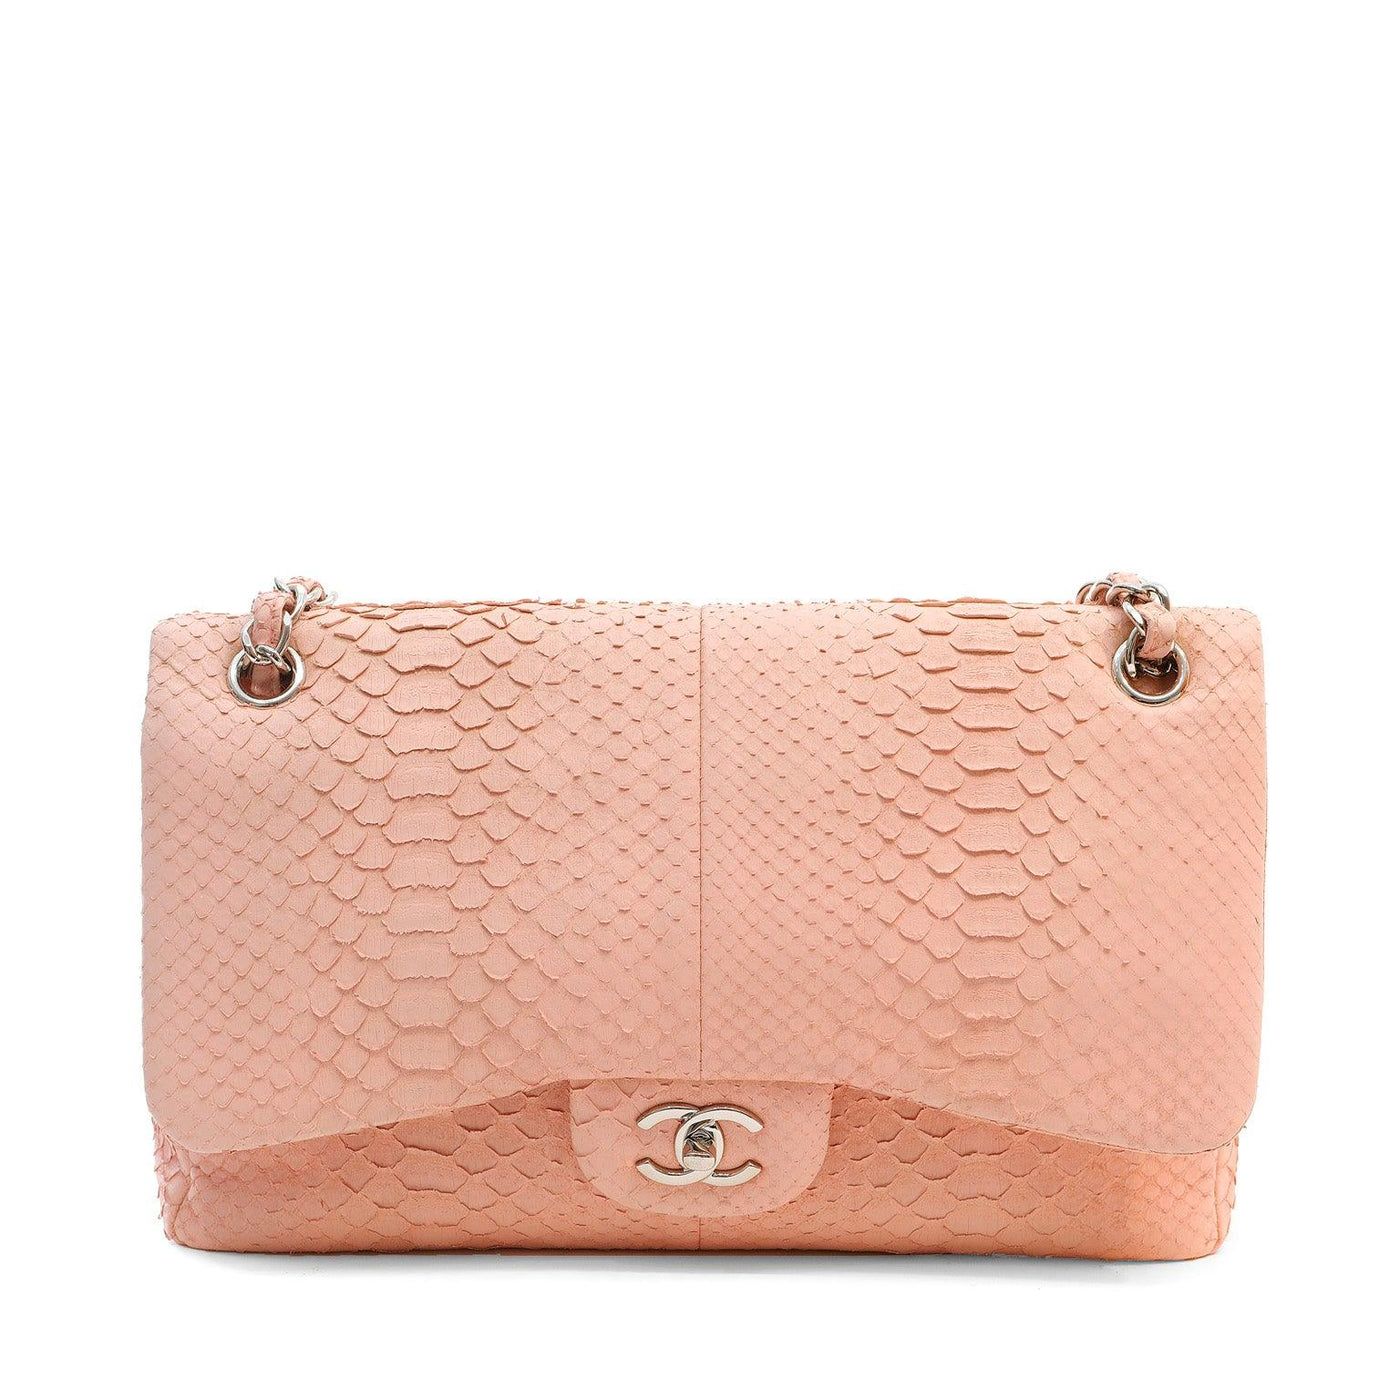 Chanel Bubblegum Pink Python Jumbo Classic w/ Silver Hardware - Only Authentics